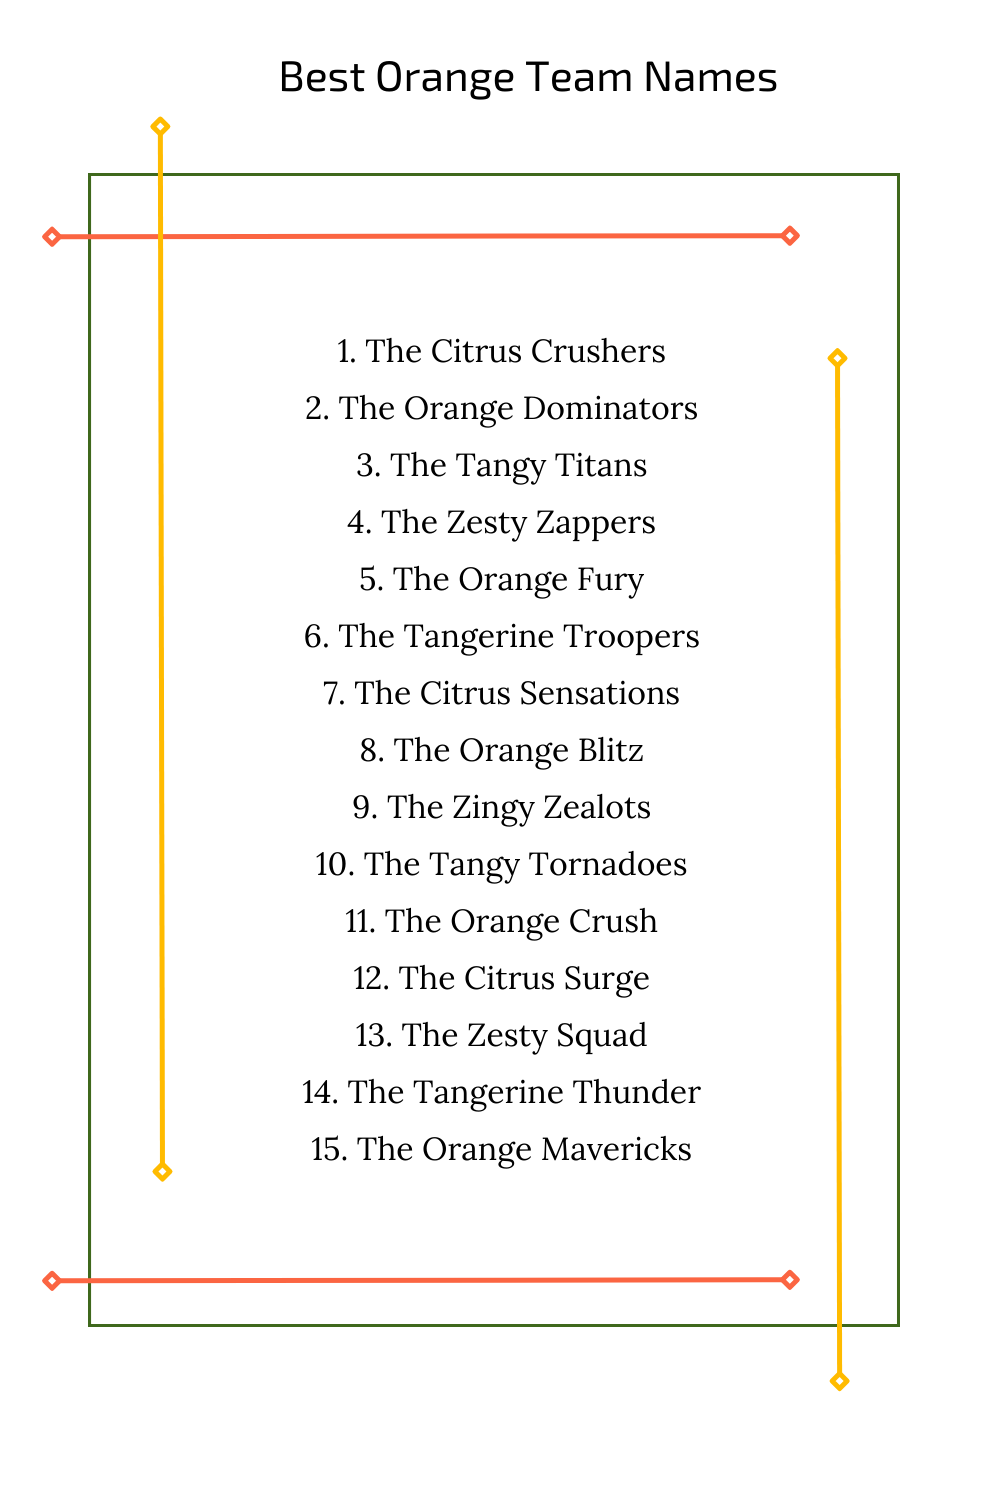 Best Orange Team Names